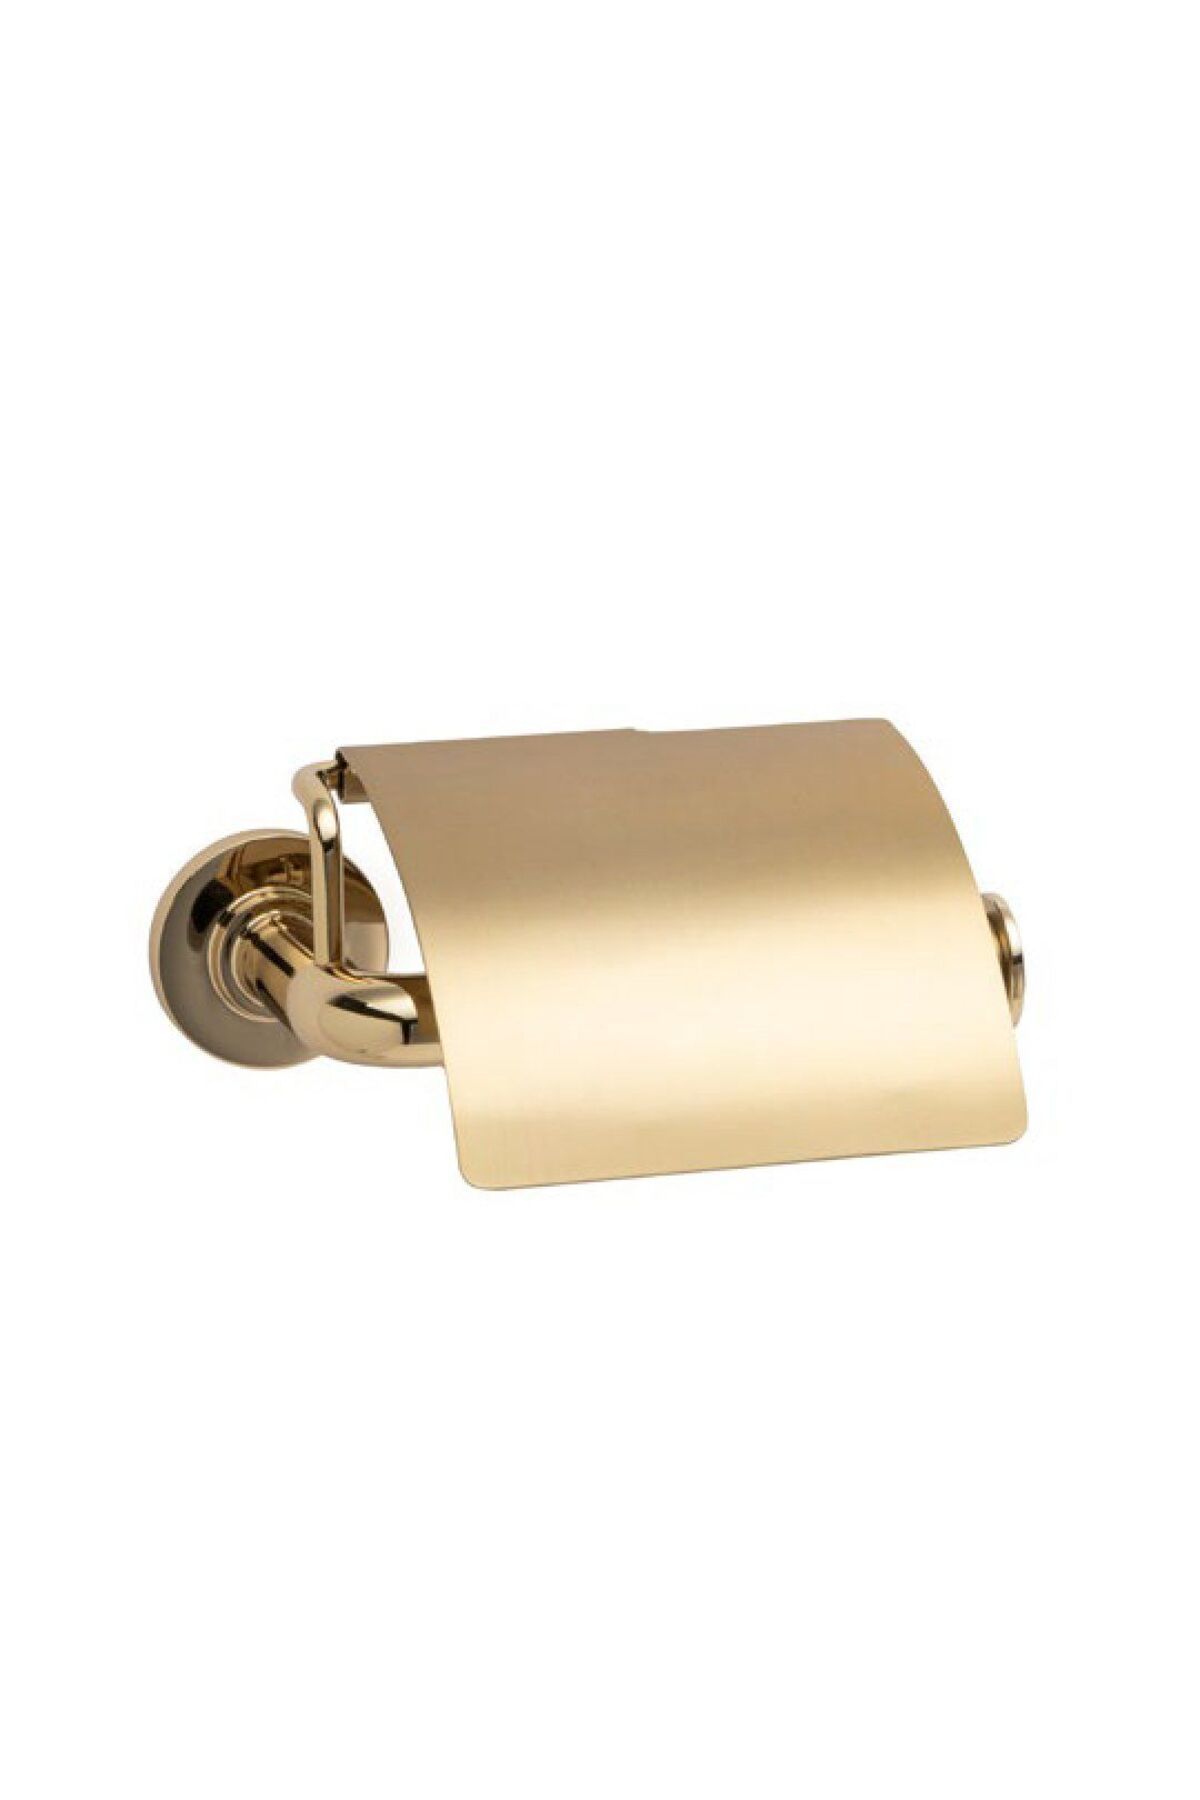 Nord Kapaklı Tuvalet Kağıtlığı Gold/Gold Branch Renk 69X121X155 mm